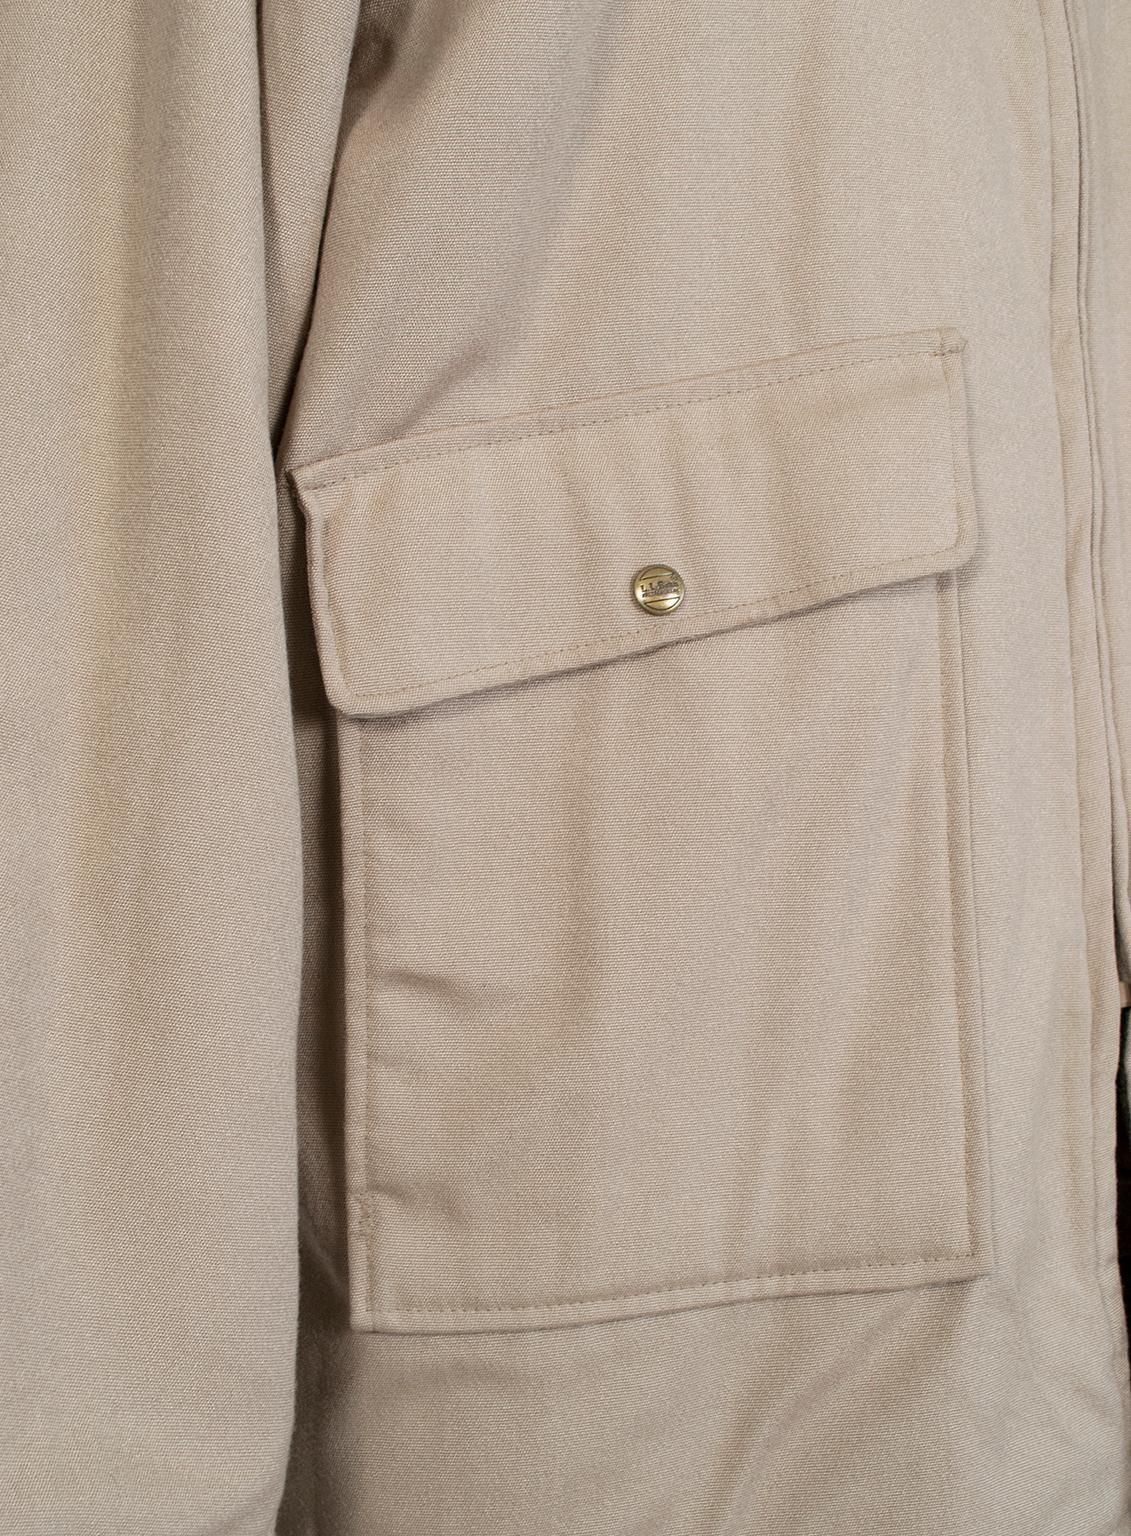 Men’s LL Bean *Large Size* Camo-Khaki Reversible Field Bush Jacket - XXL, 1980s 6